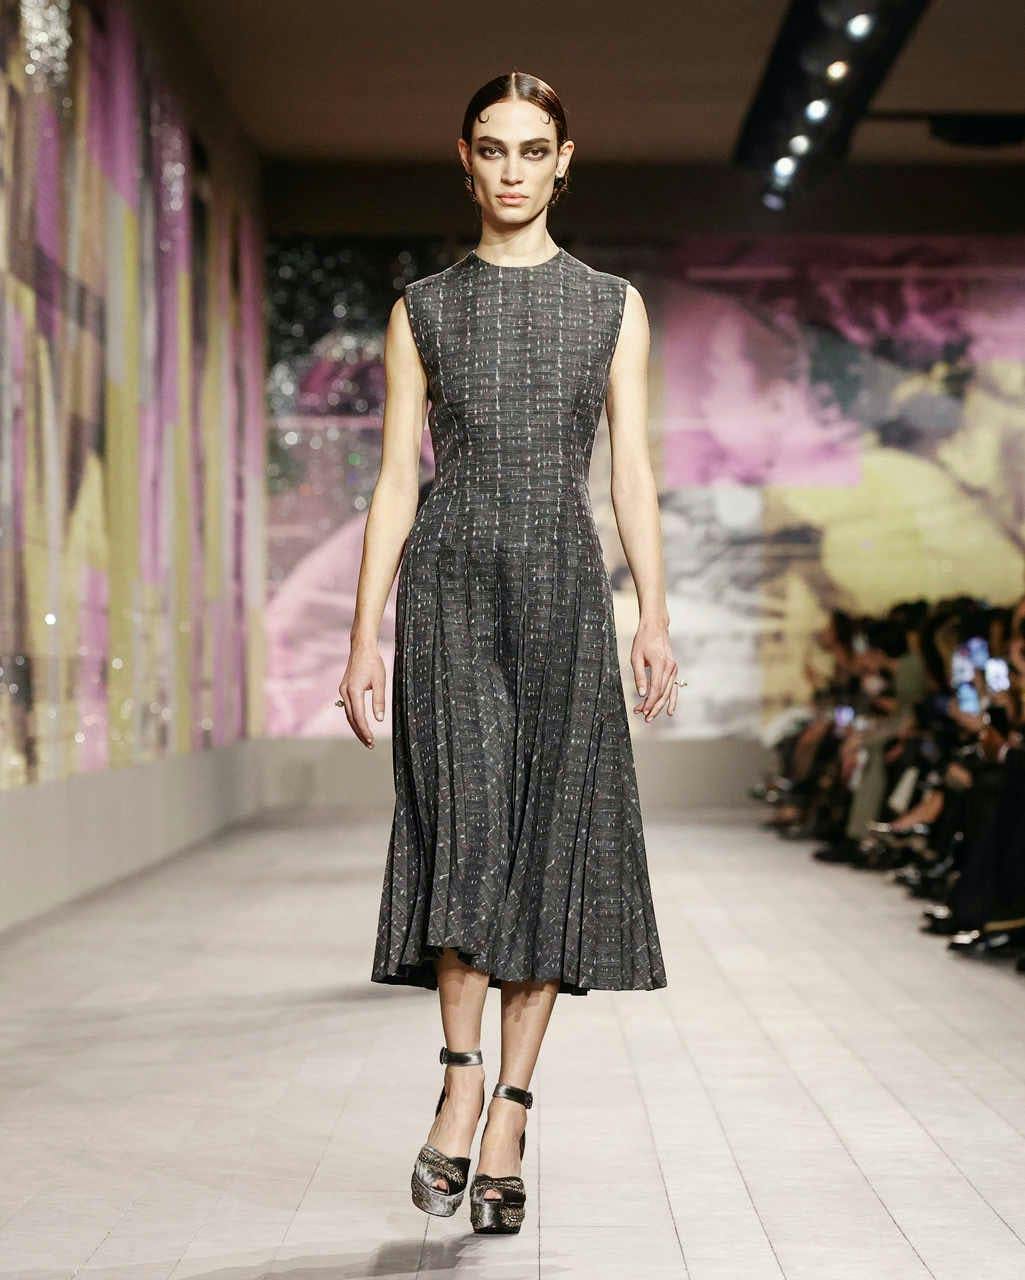 dress clothing formal wear fashion shoe footwear person runway